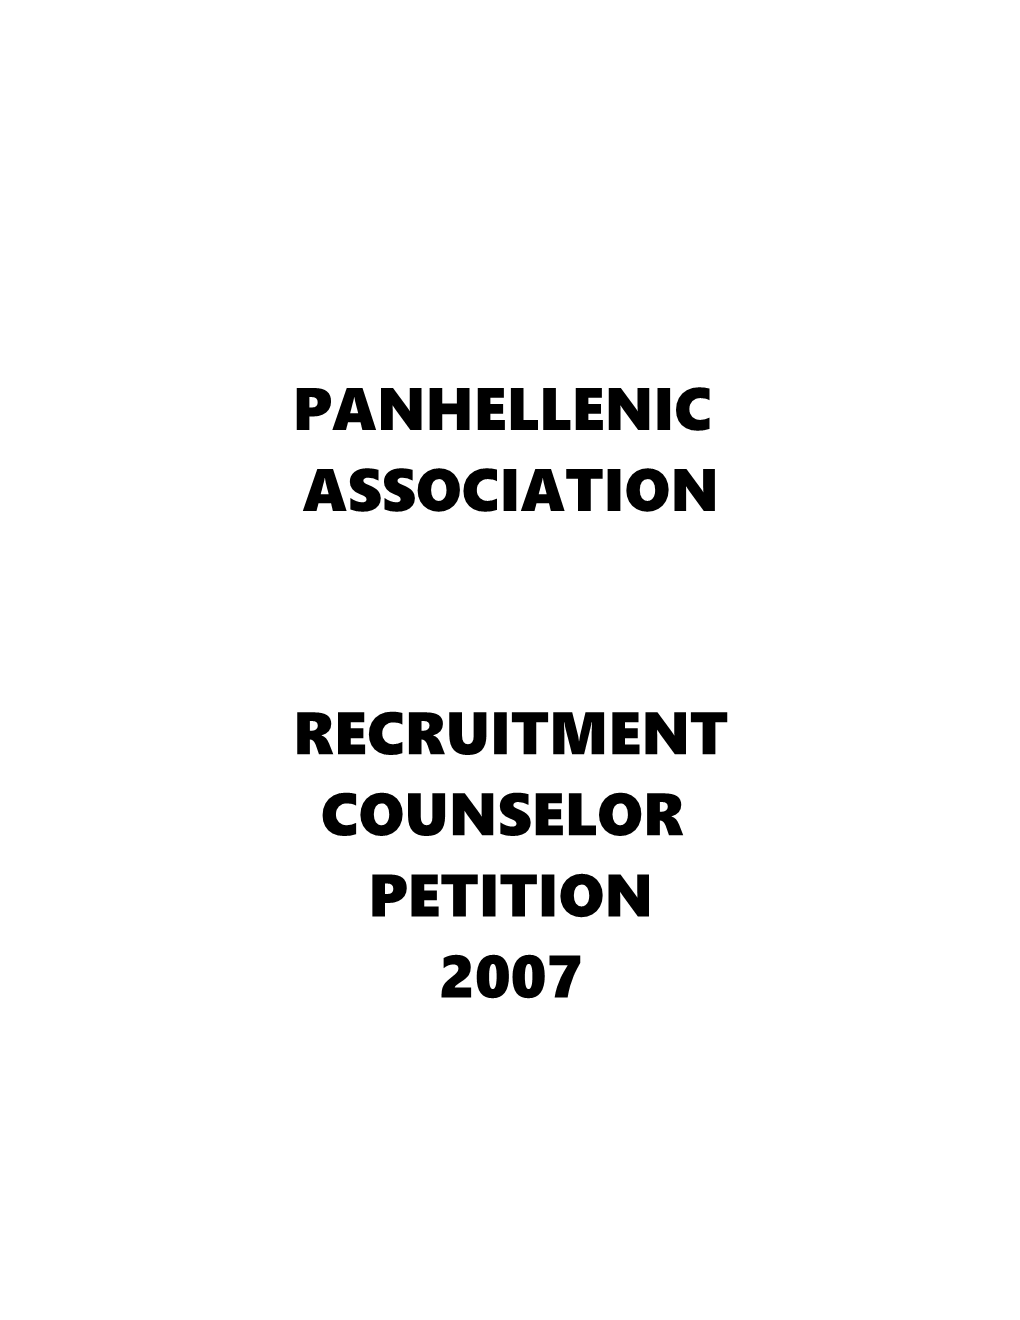 Panhellenic Association